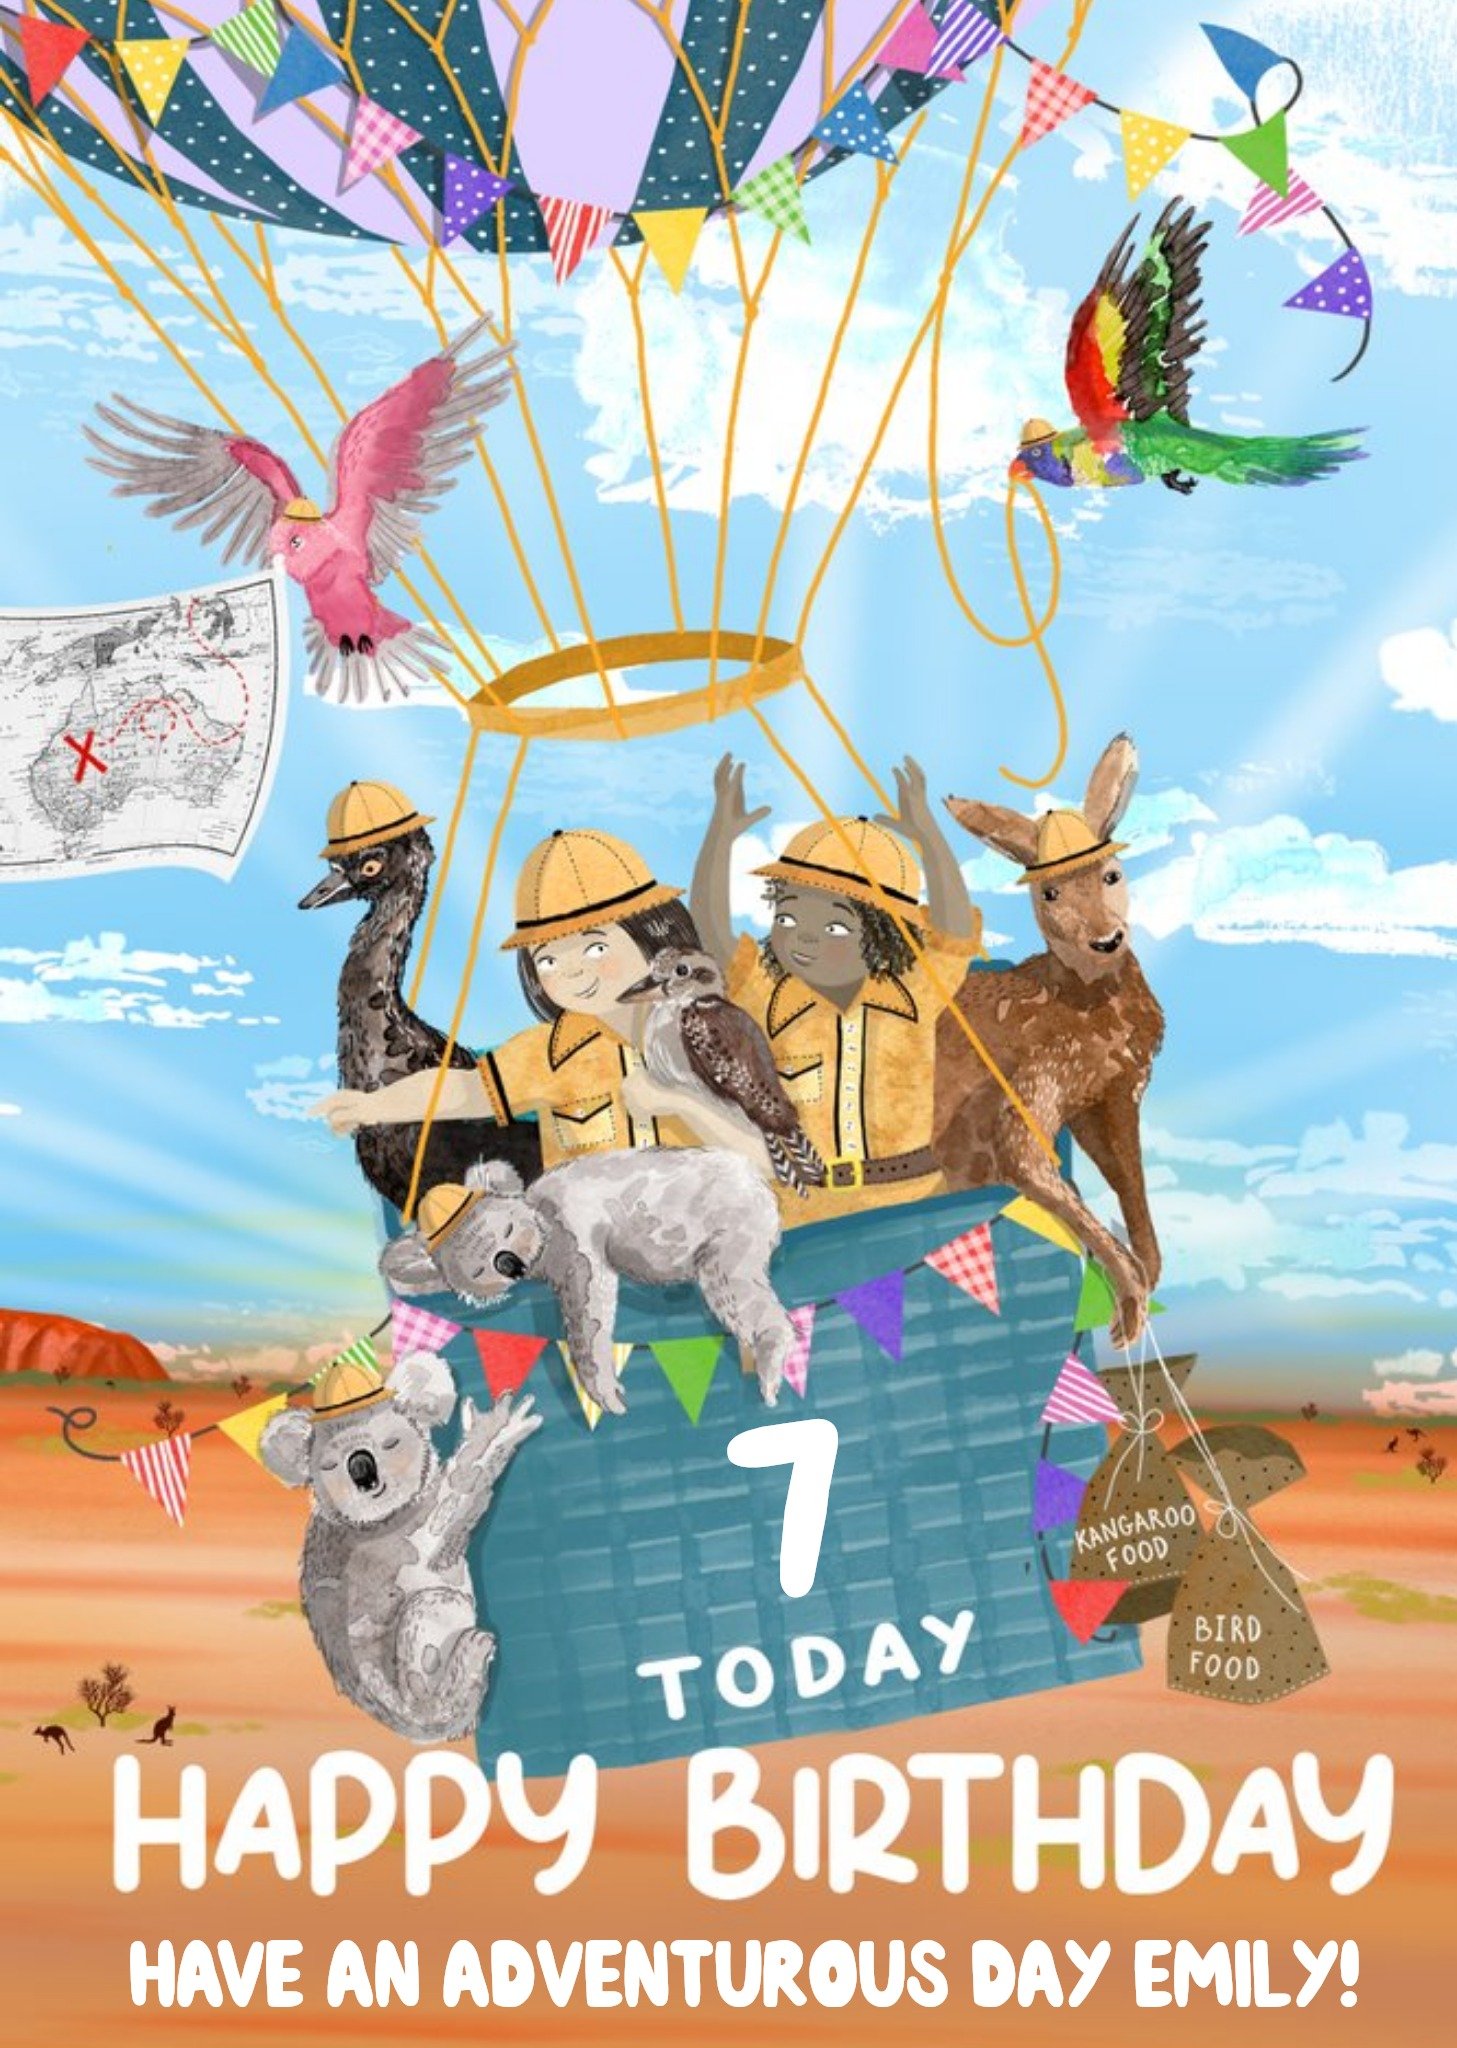 Okey Dokey Design Okey Dokey Hot Air Balloon 7 Today Have An Adventurous Birthday Card Ecard